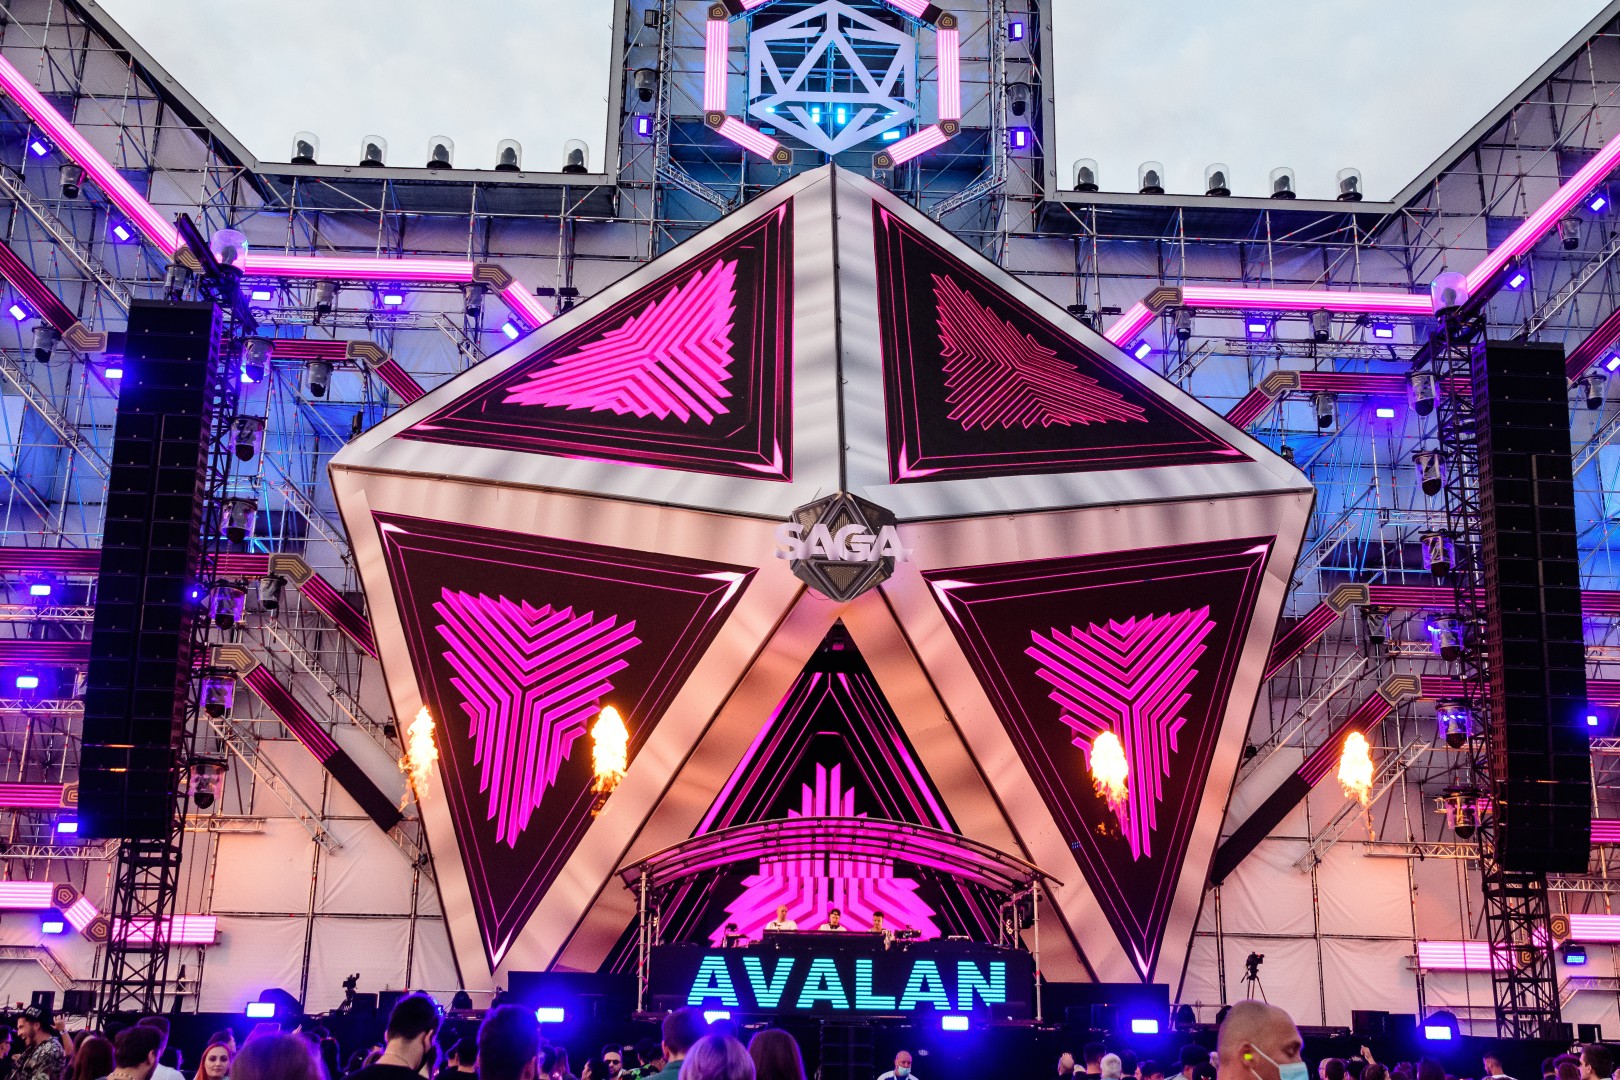 Avalan at Romaero in Bucharest on September 11, 2021 (8cfa66640f)